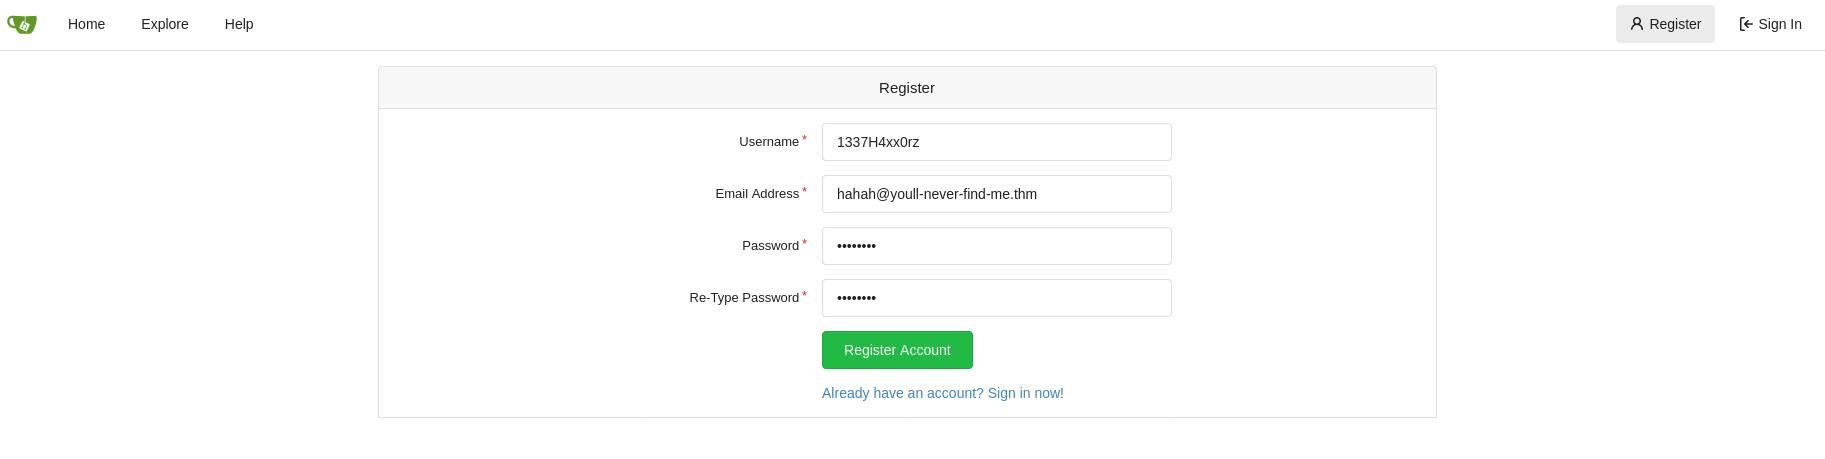 Register a new hacker user